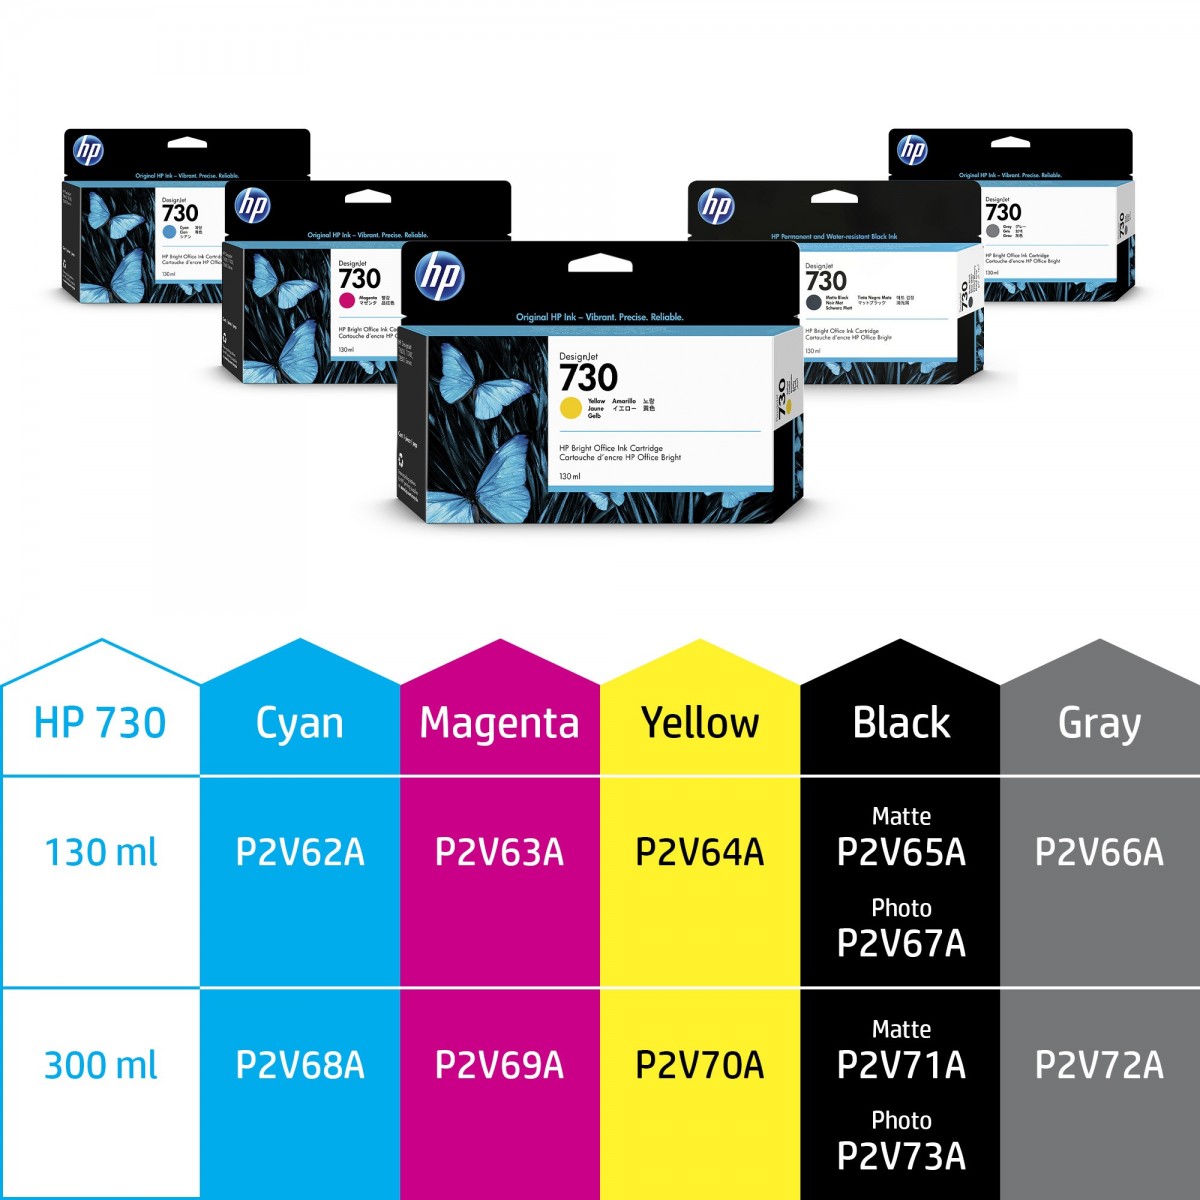 HP 730 300-ml Photo Black DesignJet Ink Cartridge - Dye-based ink - 300 ml - 1 pc(s)